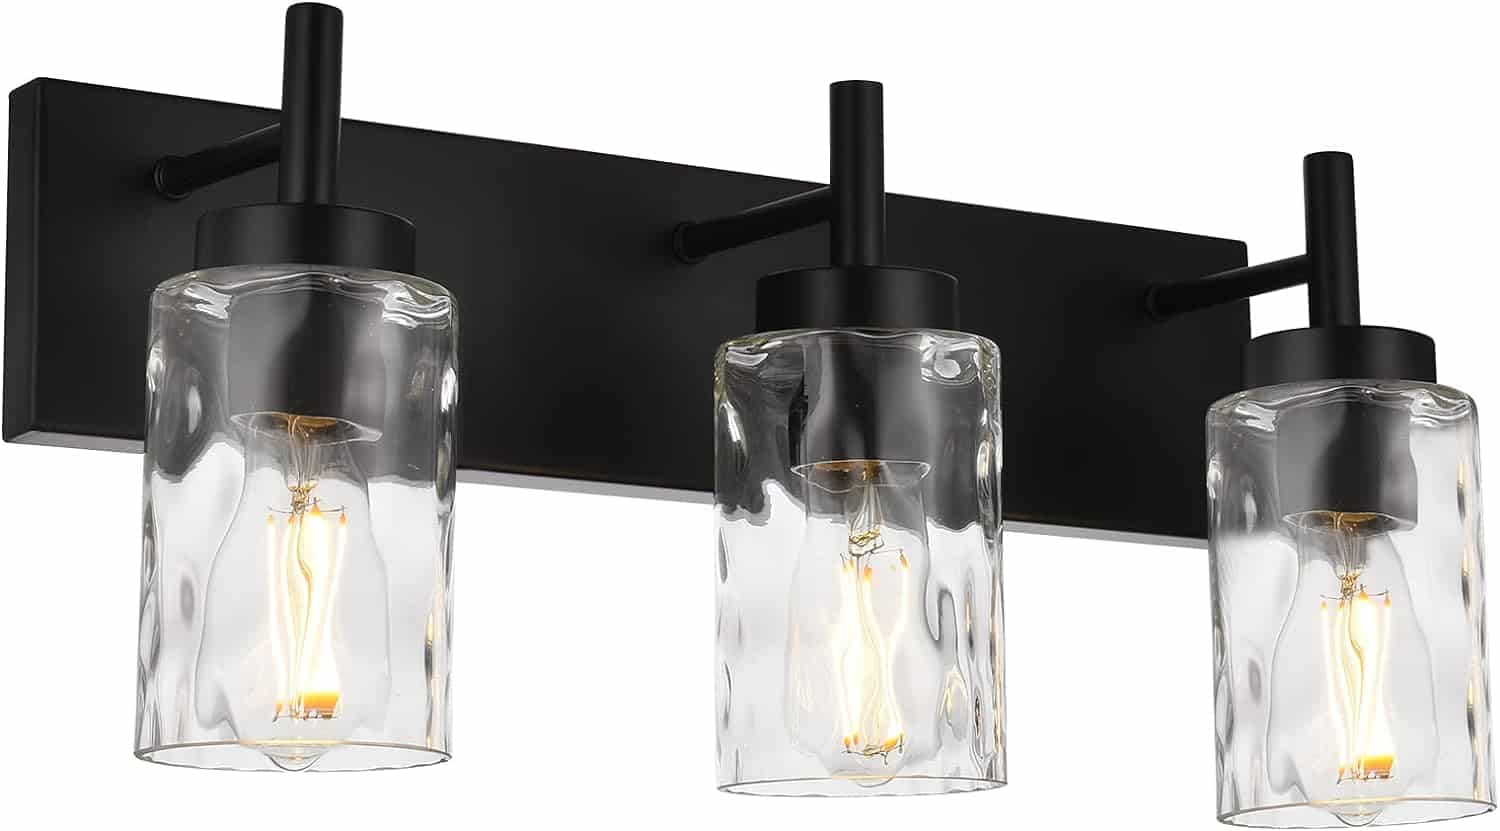 BONLICHT Vanity Light Fixtures: A Stylish and Versatile Lighting Solution